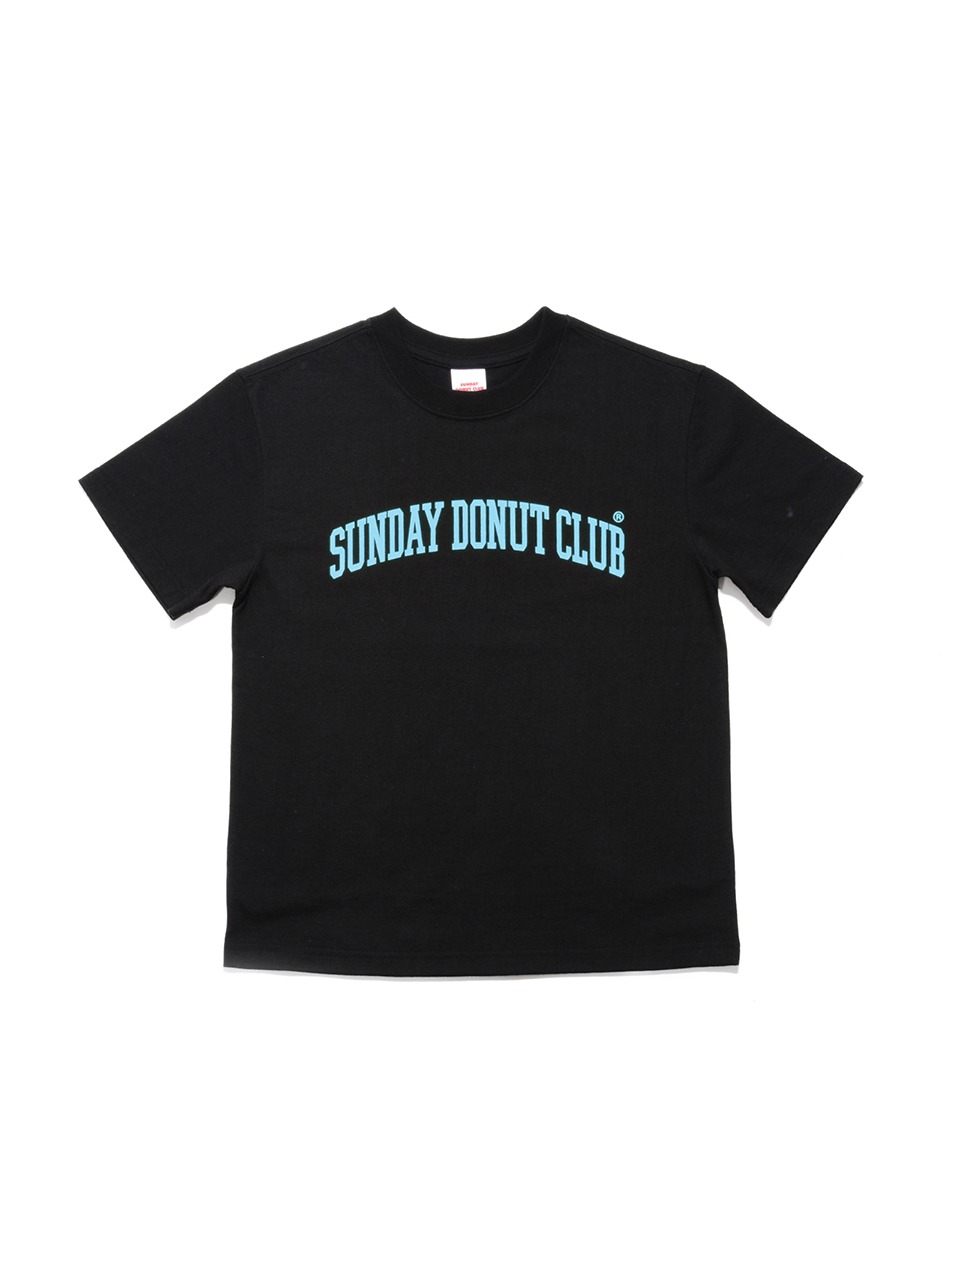 SUNDAY DONUT CLUB TEE [Black]